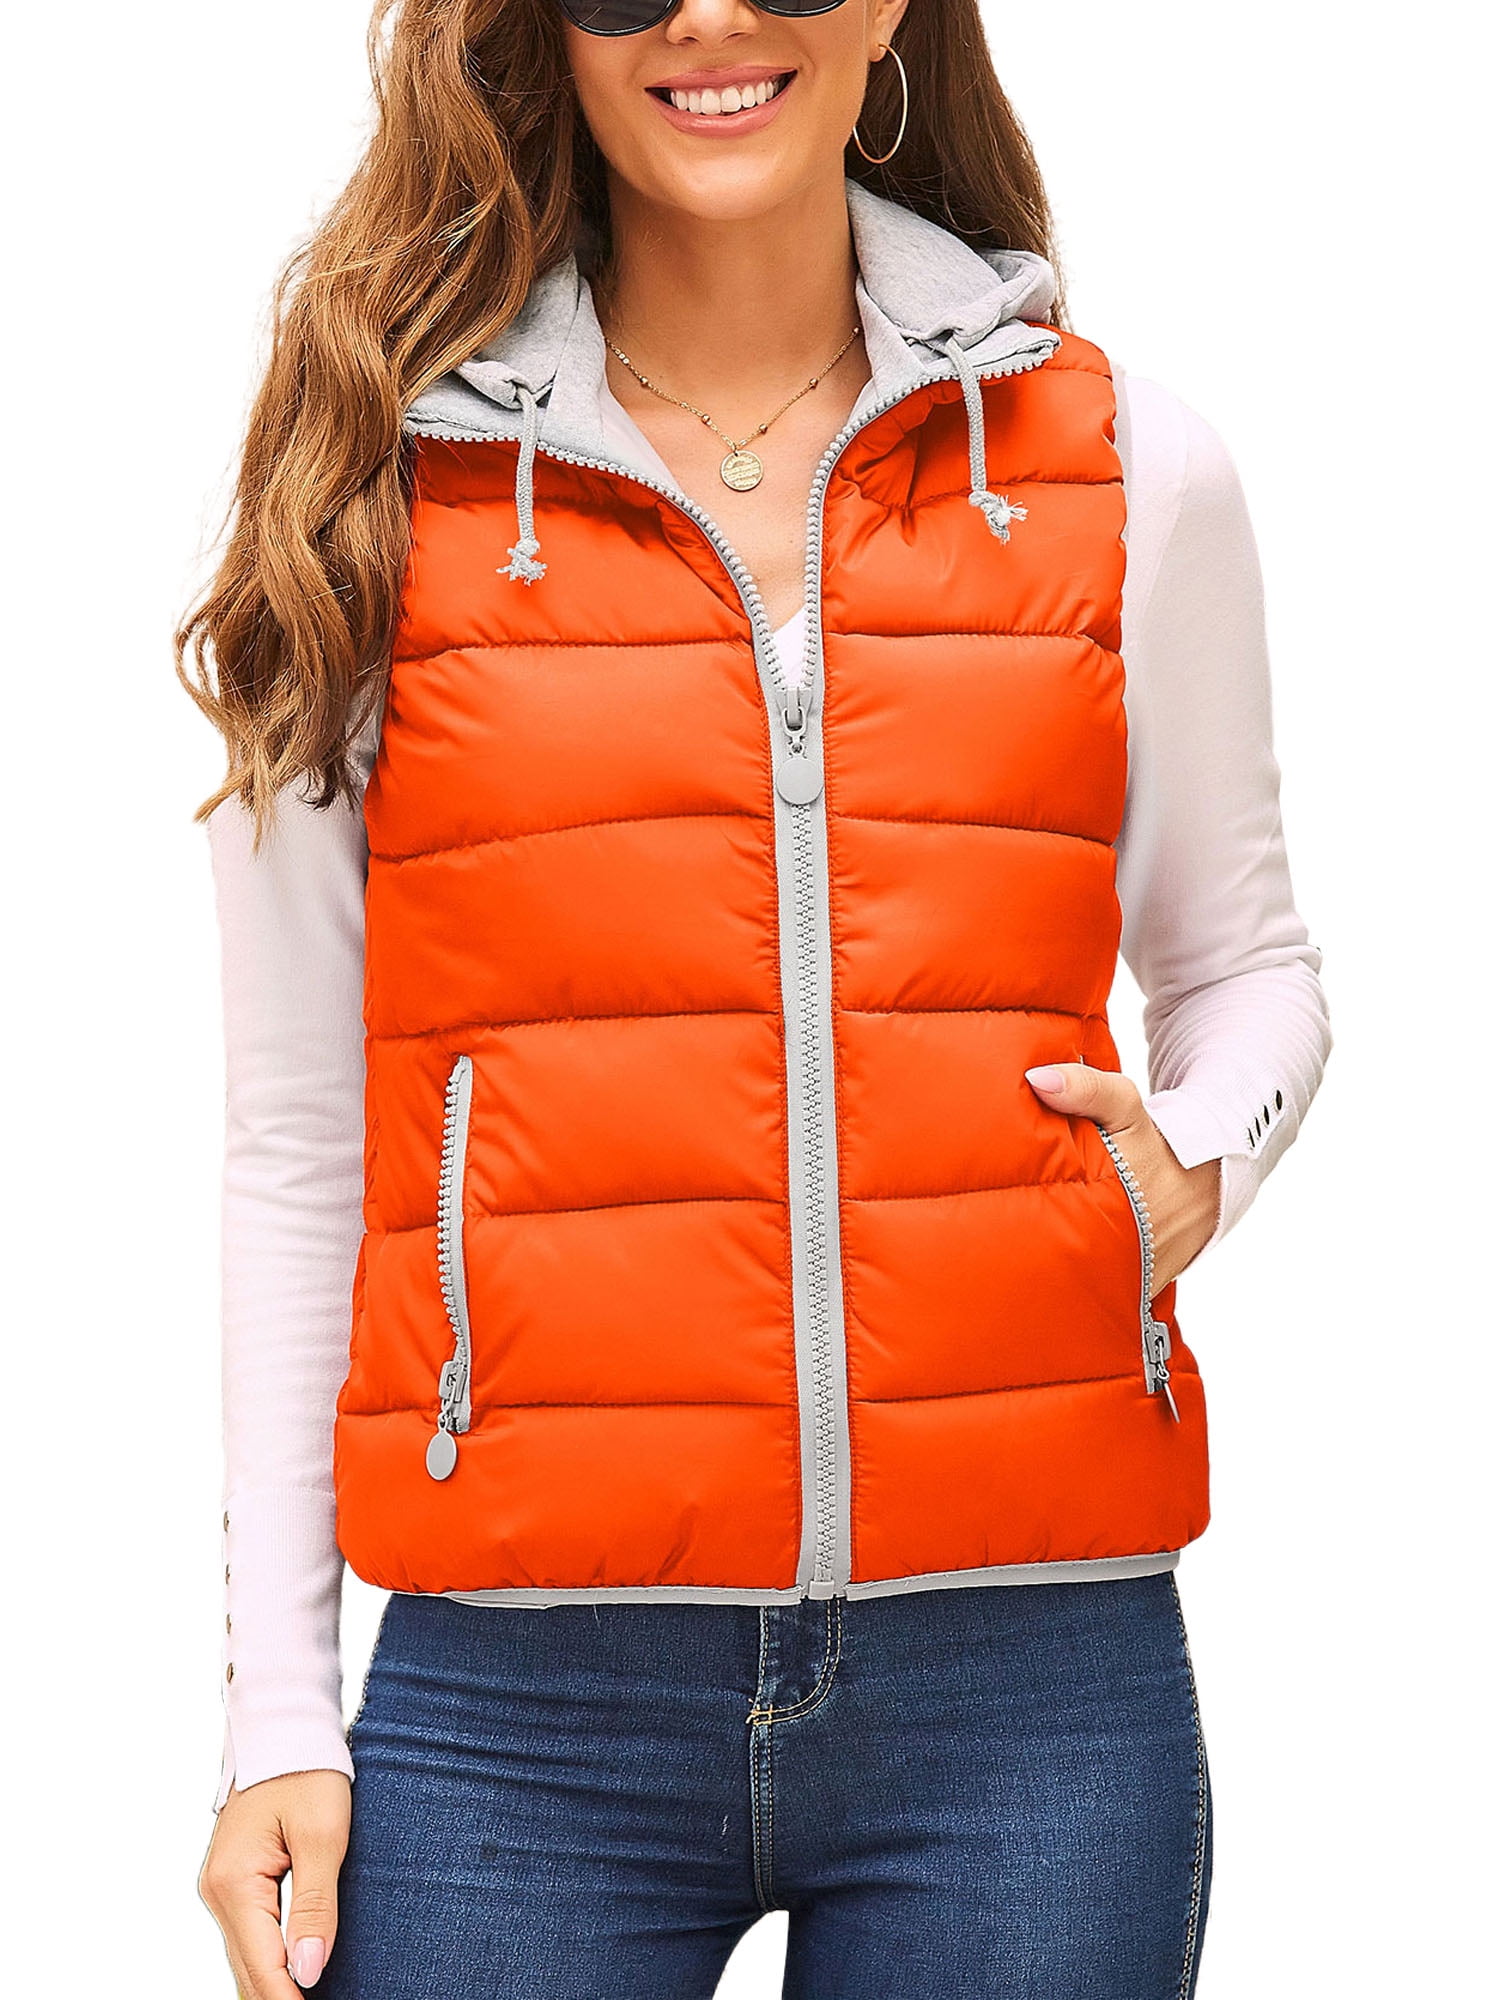 Transer Womens Winter Warm Zipper Pockets Slim Sleeveless Jacket Vest Gilet Waistcoat Coat 